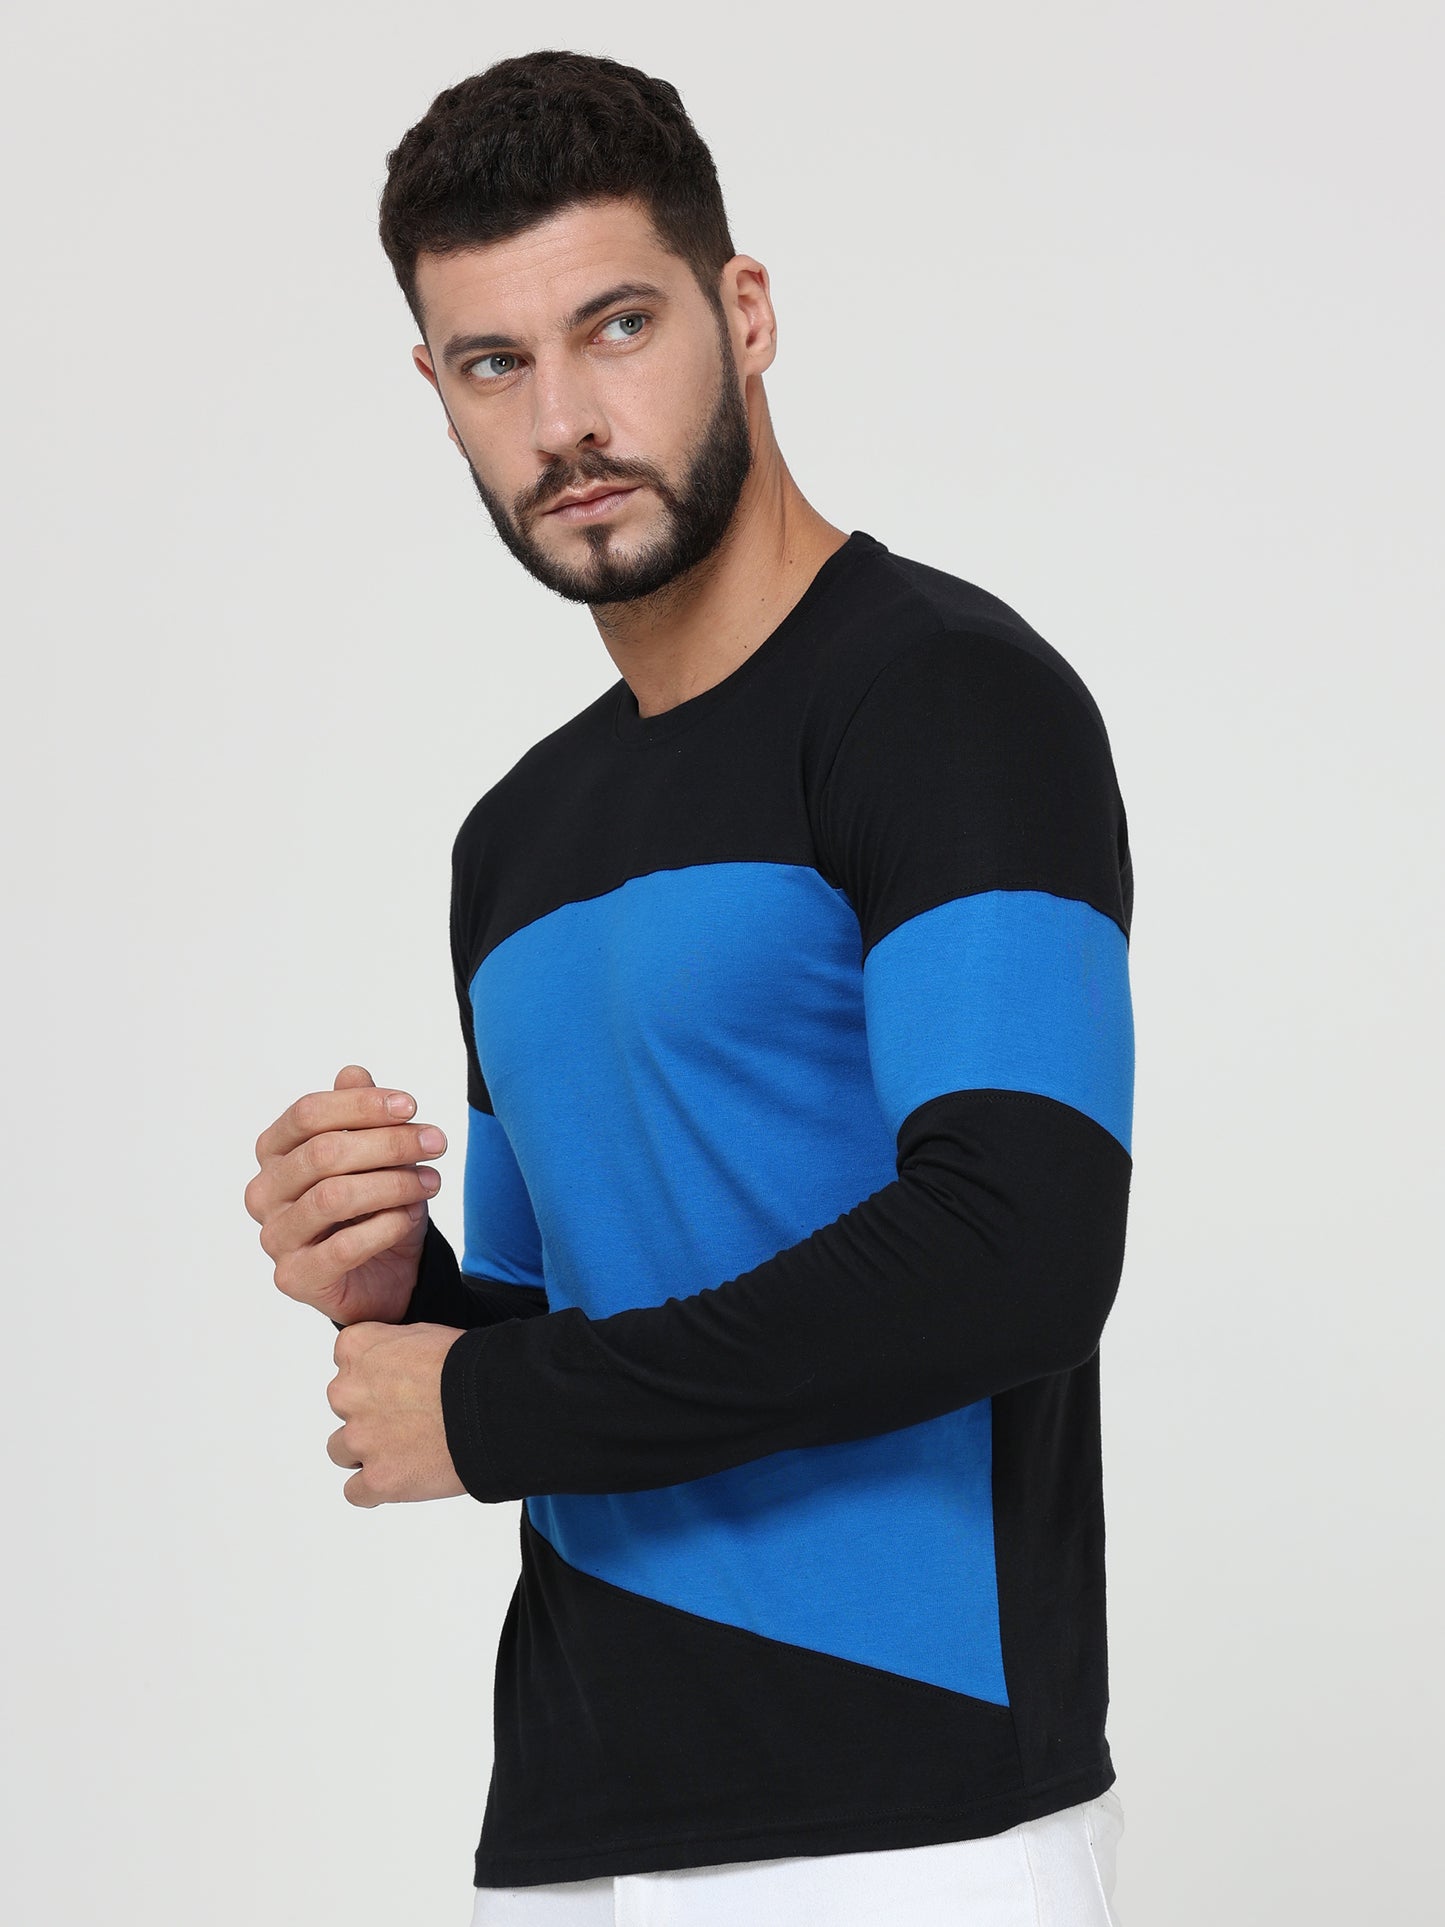 Men's Cotton Round Neck Color Block Full Sleeve Blackroyalblue Color T-Shirt